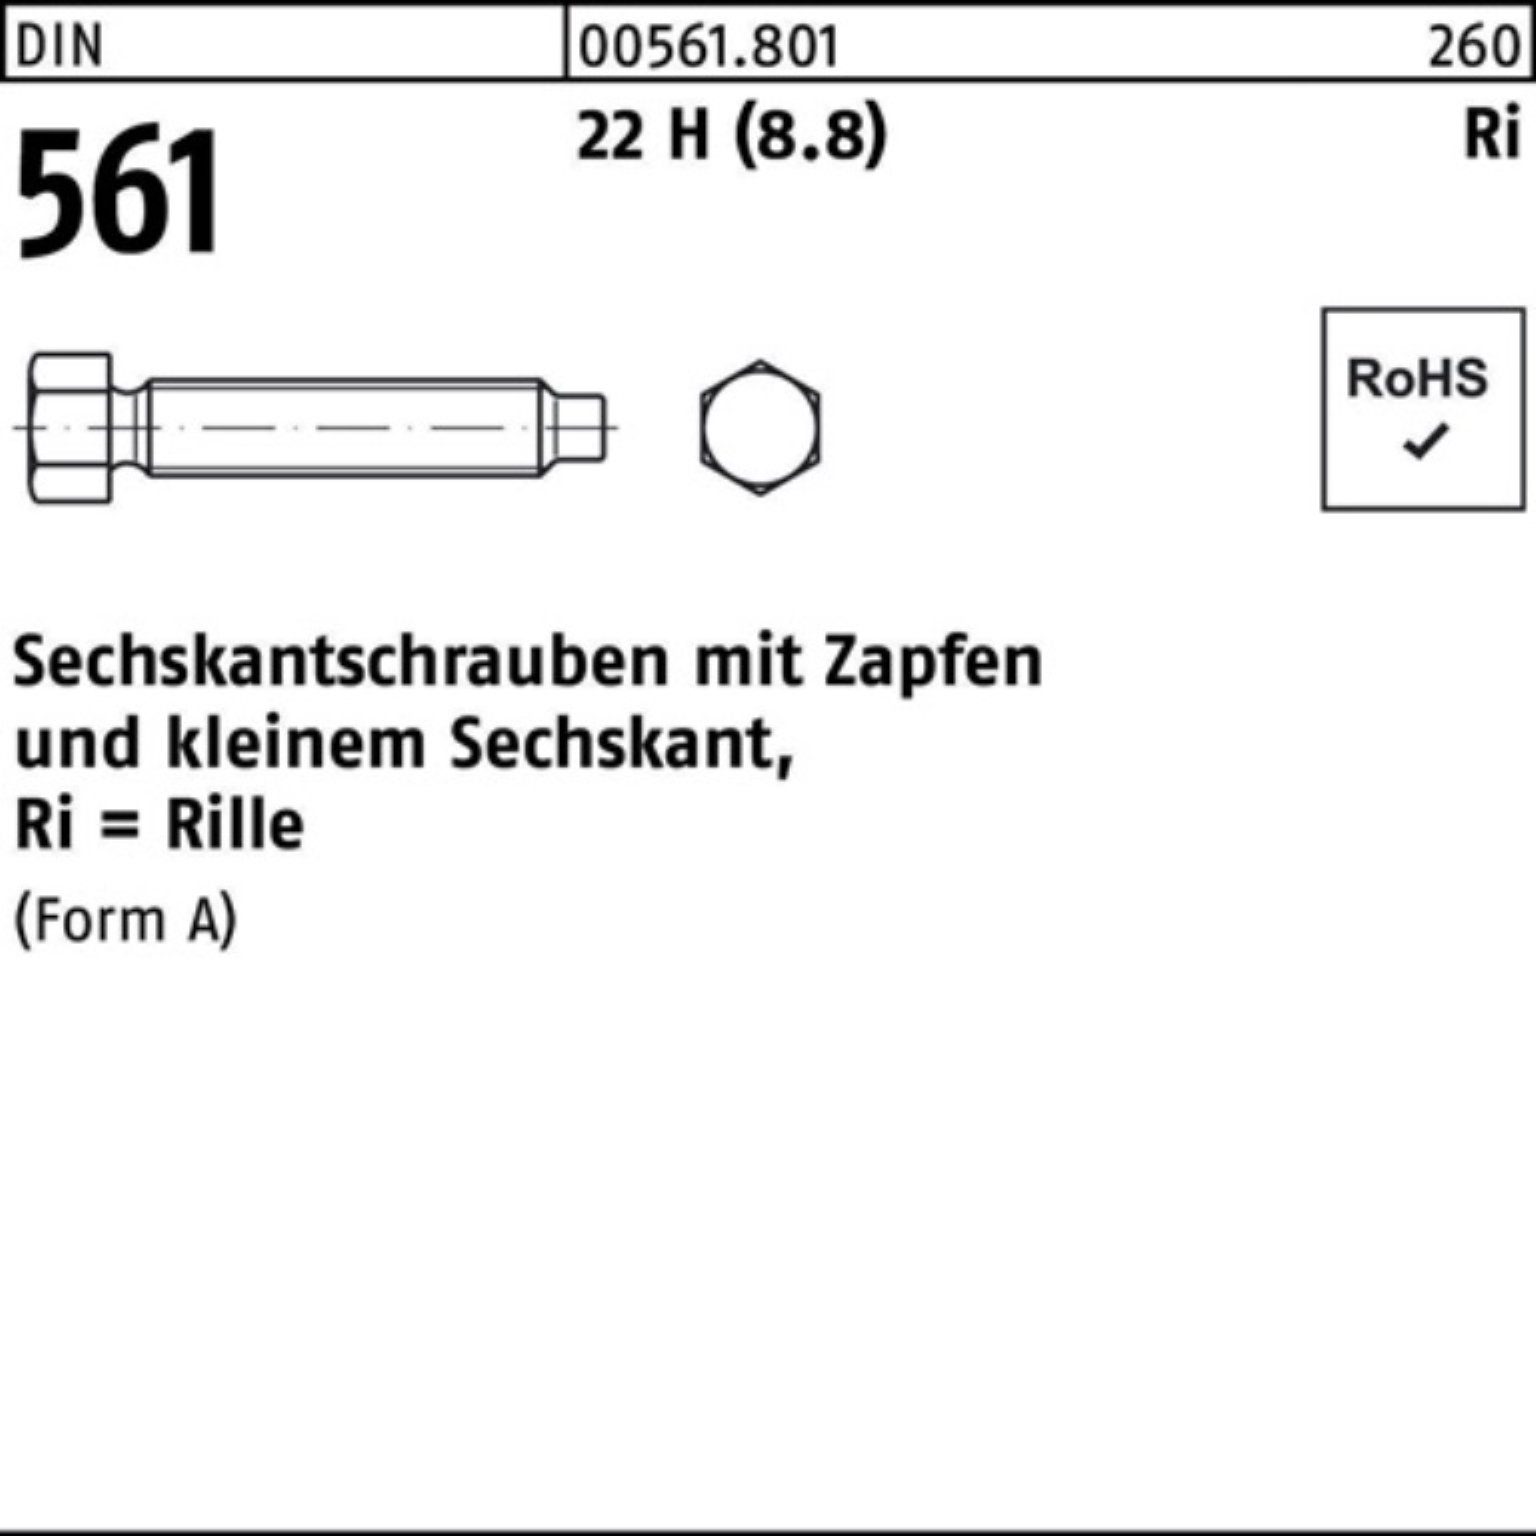 Reyher Sechskantschraube 100er Pack Sechskantschraube DIN 561 Zapfen AM 8x 35 22 H (8.8) 100 St